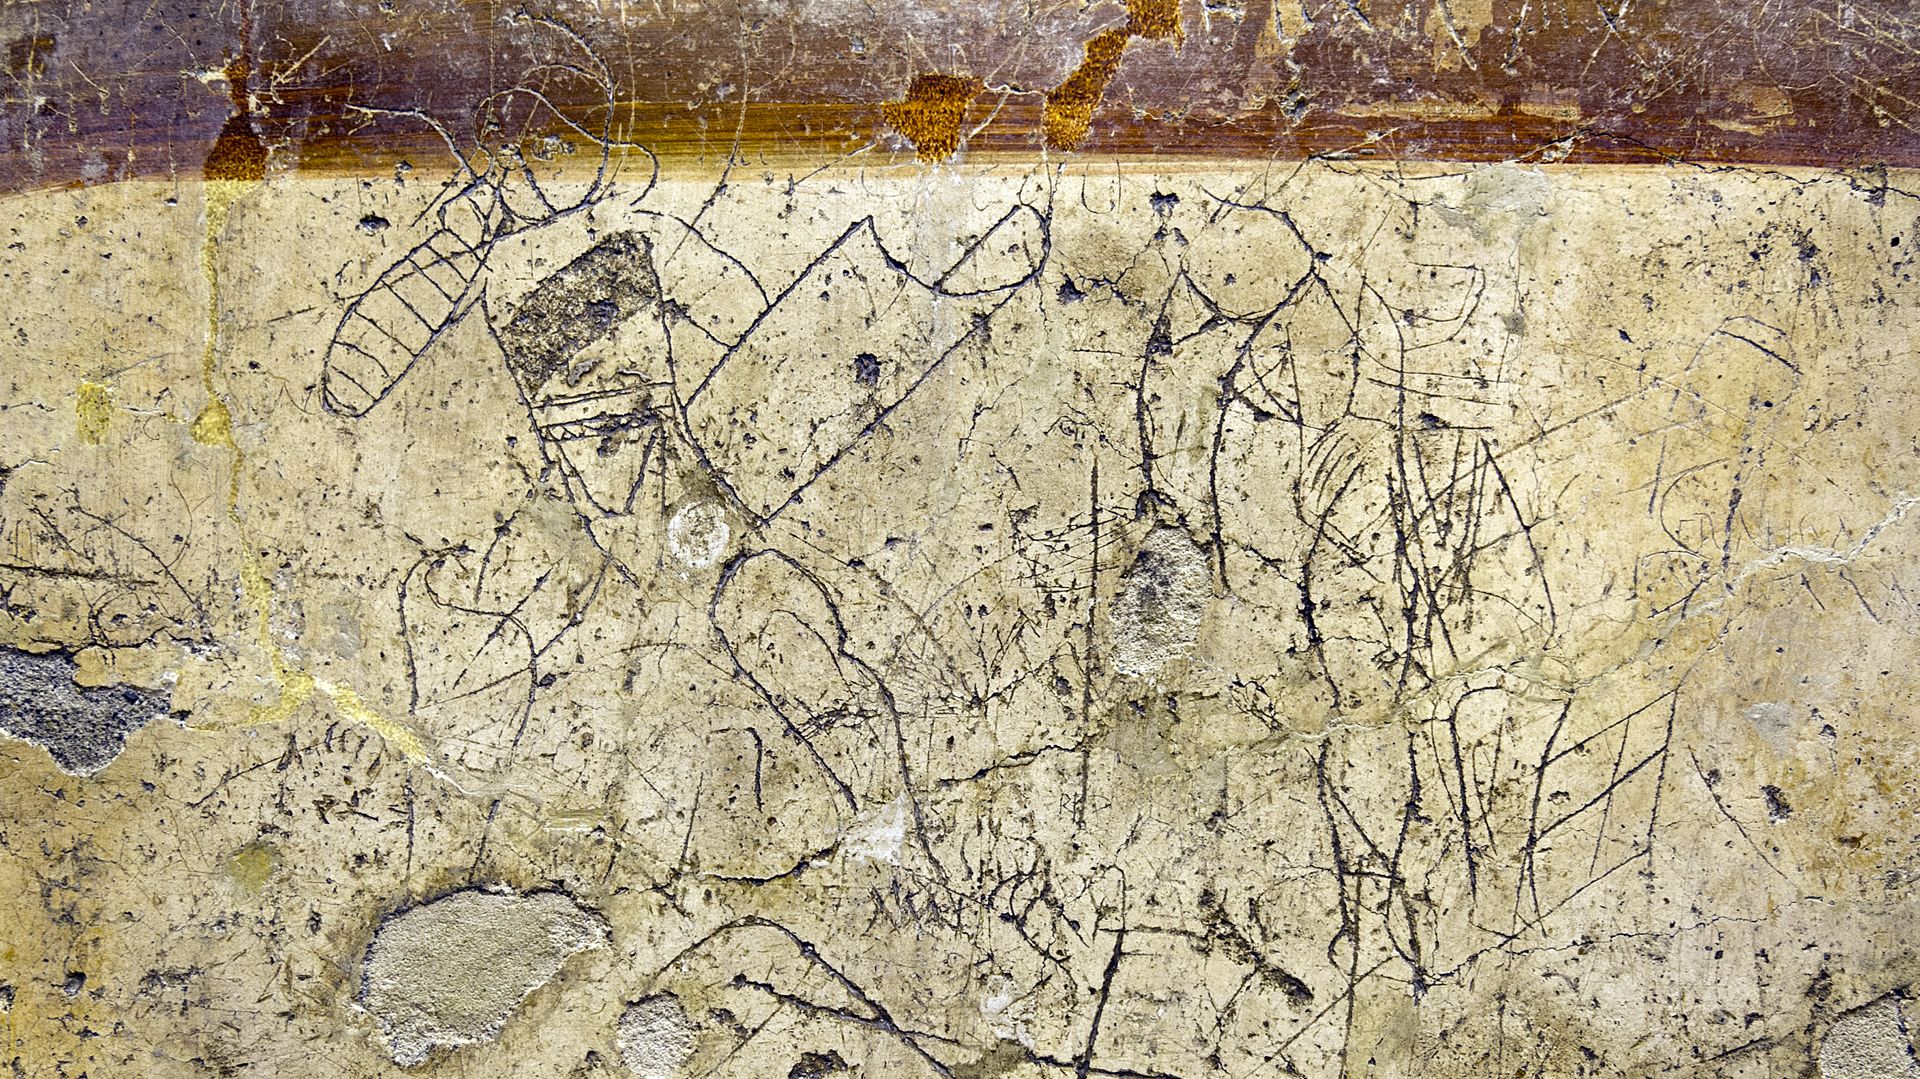 7 Entertaining Examples Of Ancient Graffiti Mental Floss